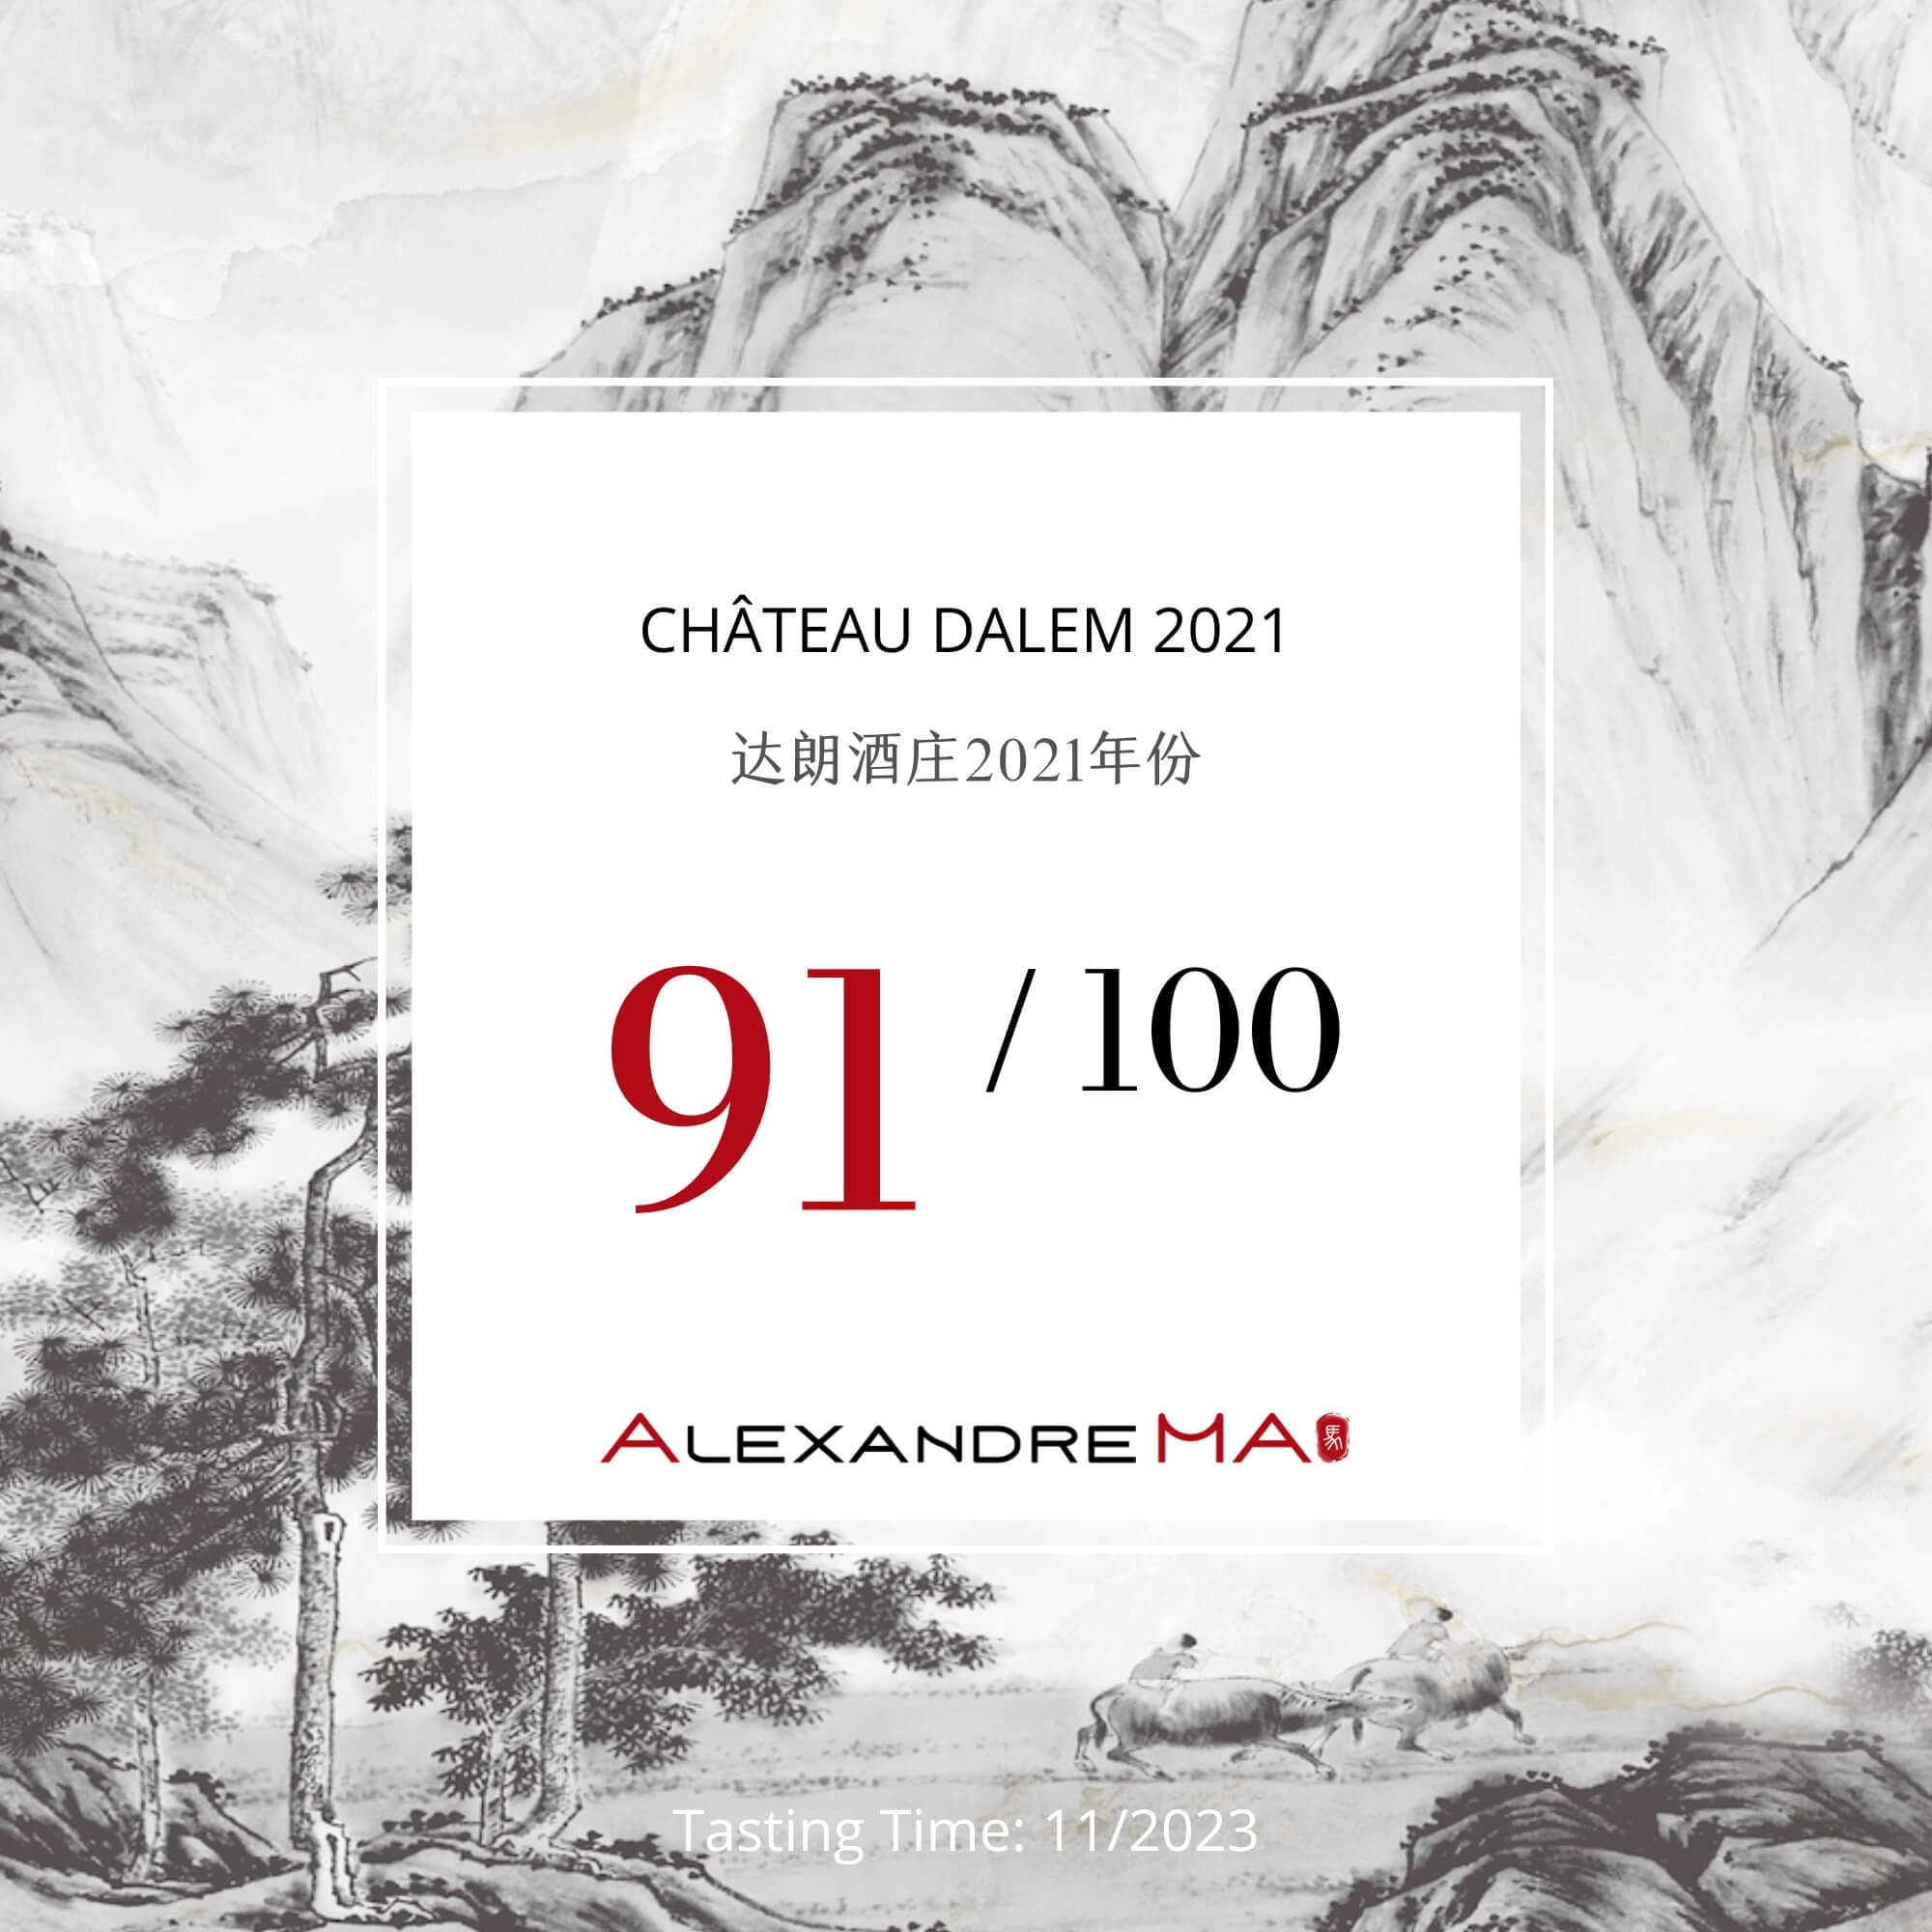 Château Dalem 2021 - Alexandre MA